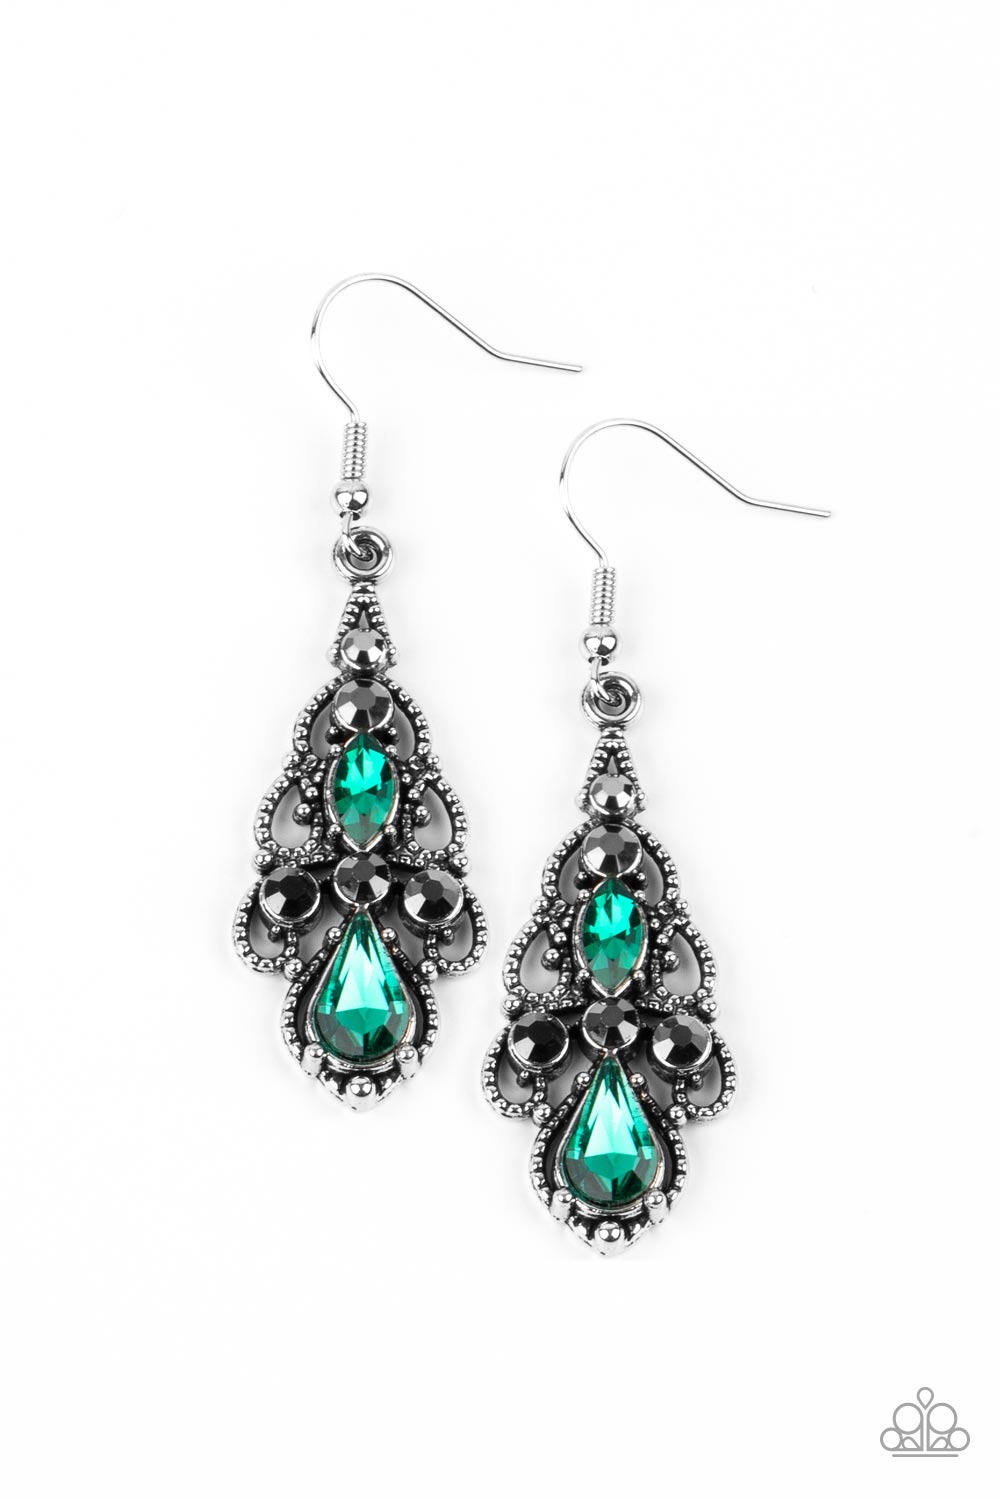 Urban Radiance Green and Hematite Rhinestone Earrings - Paparazzi Accessories- lightbox - CarasShop.com - $5 Jewelry by Cara Jewels